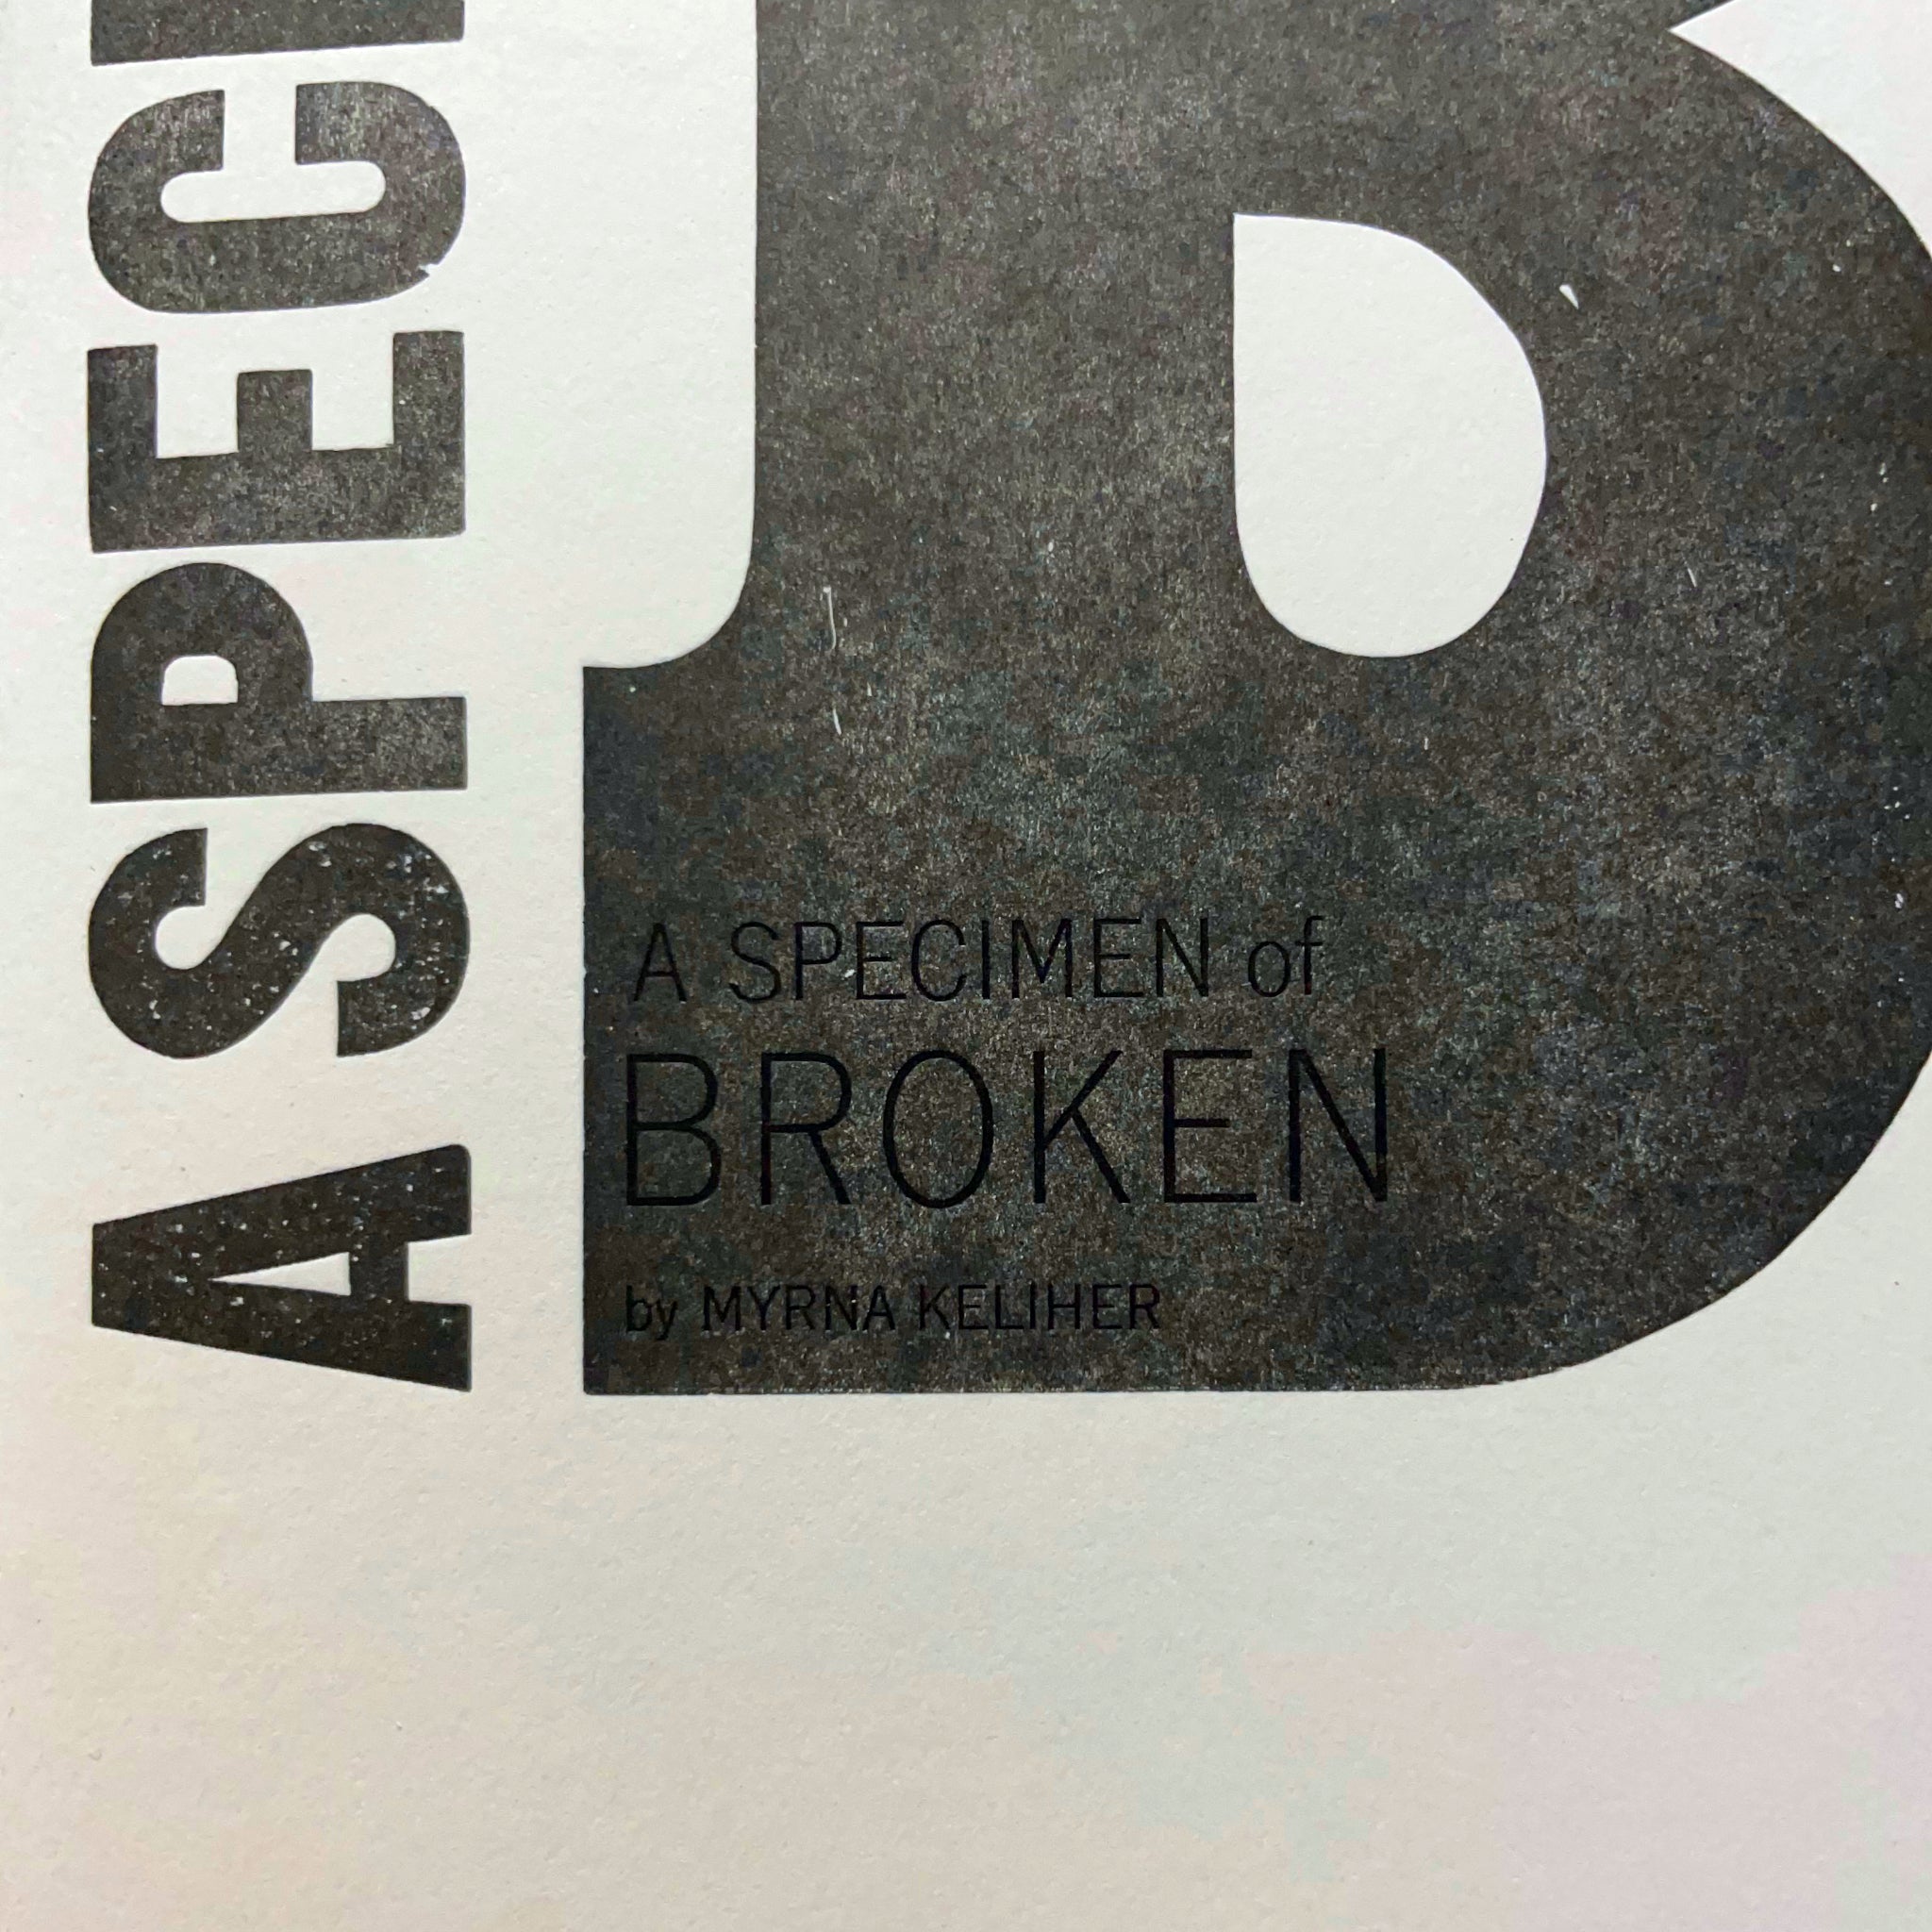 A Specimen of Broken